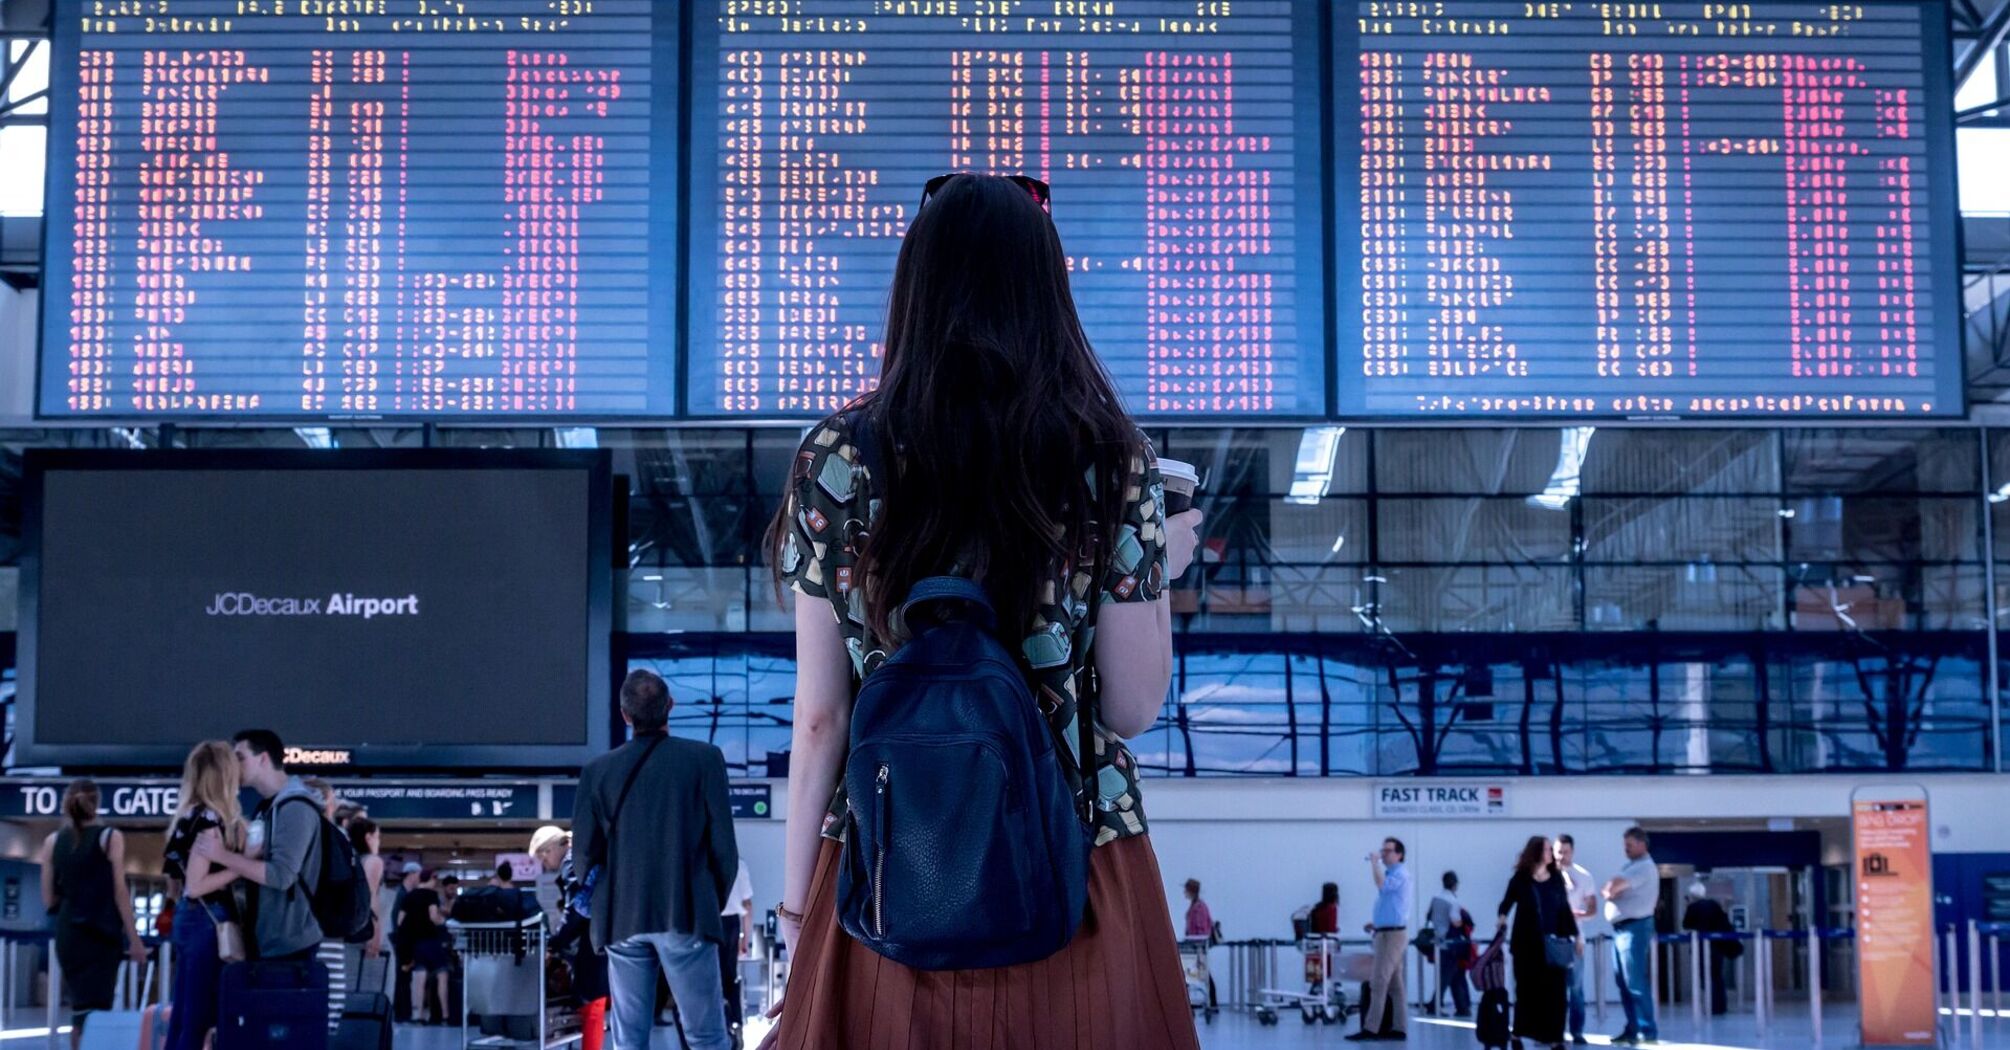 Traveler looking at flight information board in airport